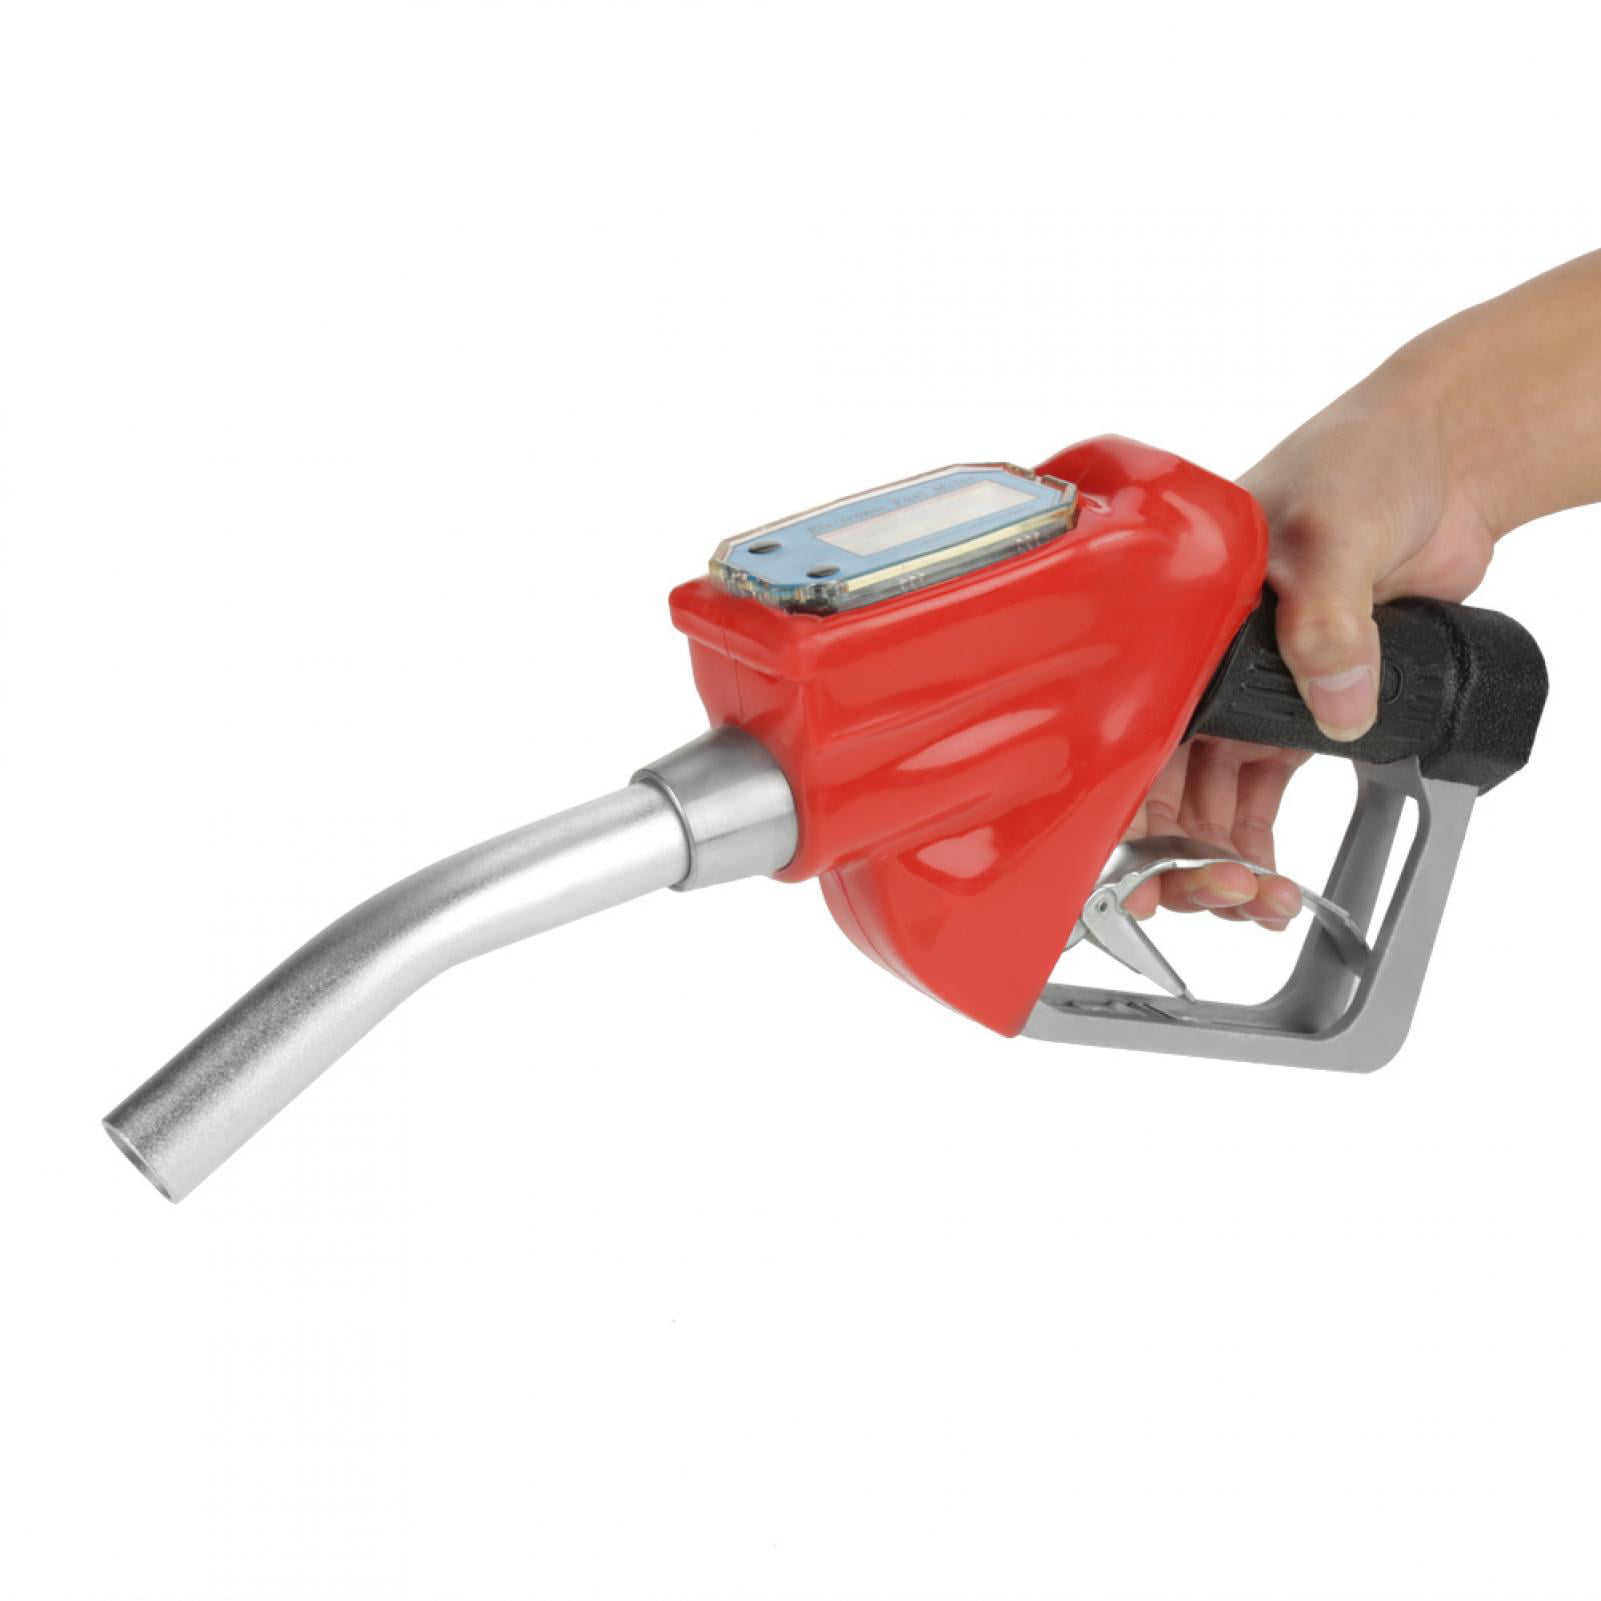 4.5M³/H Fueling Nozzle Kerosene Gasoline for Filling Fluid Such As Diesel Accurate Flow Meter Oil Nozzle 